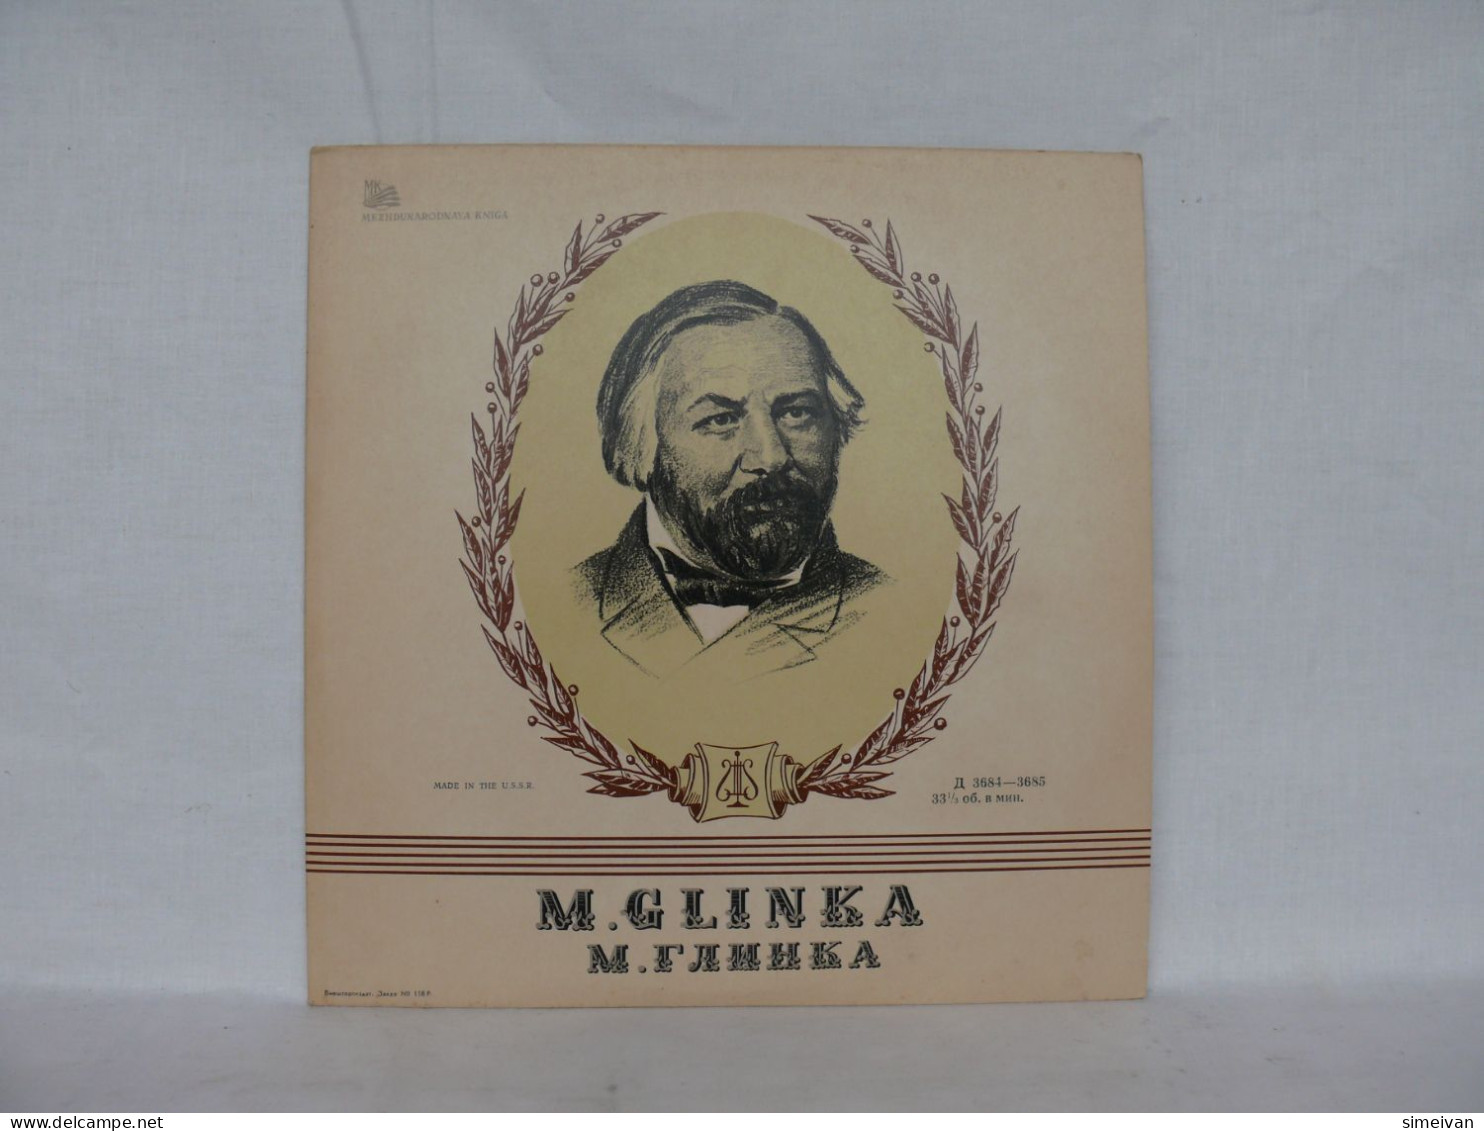 M. GLINKA "RUSLAND AND LUDMILA" "IVAN SUSANIN" VINYL MADE IN USSR D3684-5 #1680 - Oper & Operette